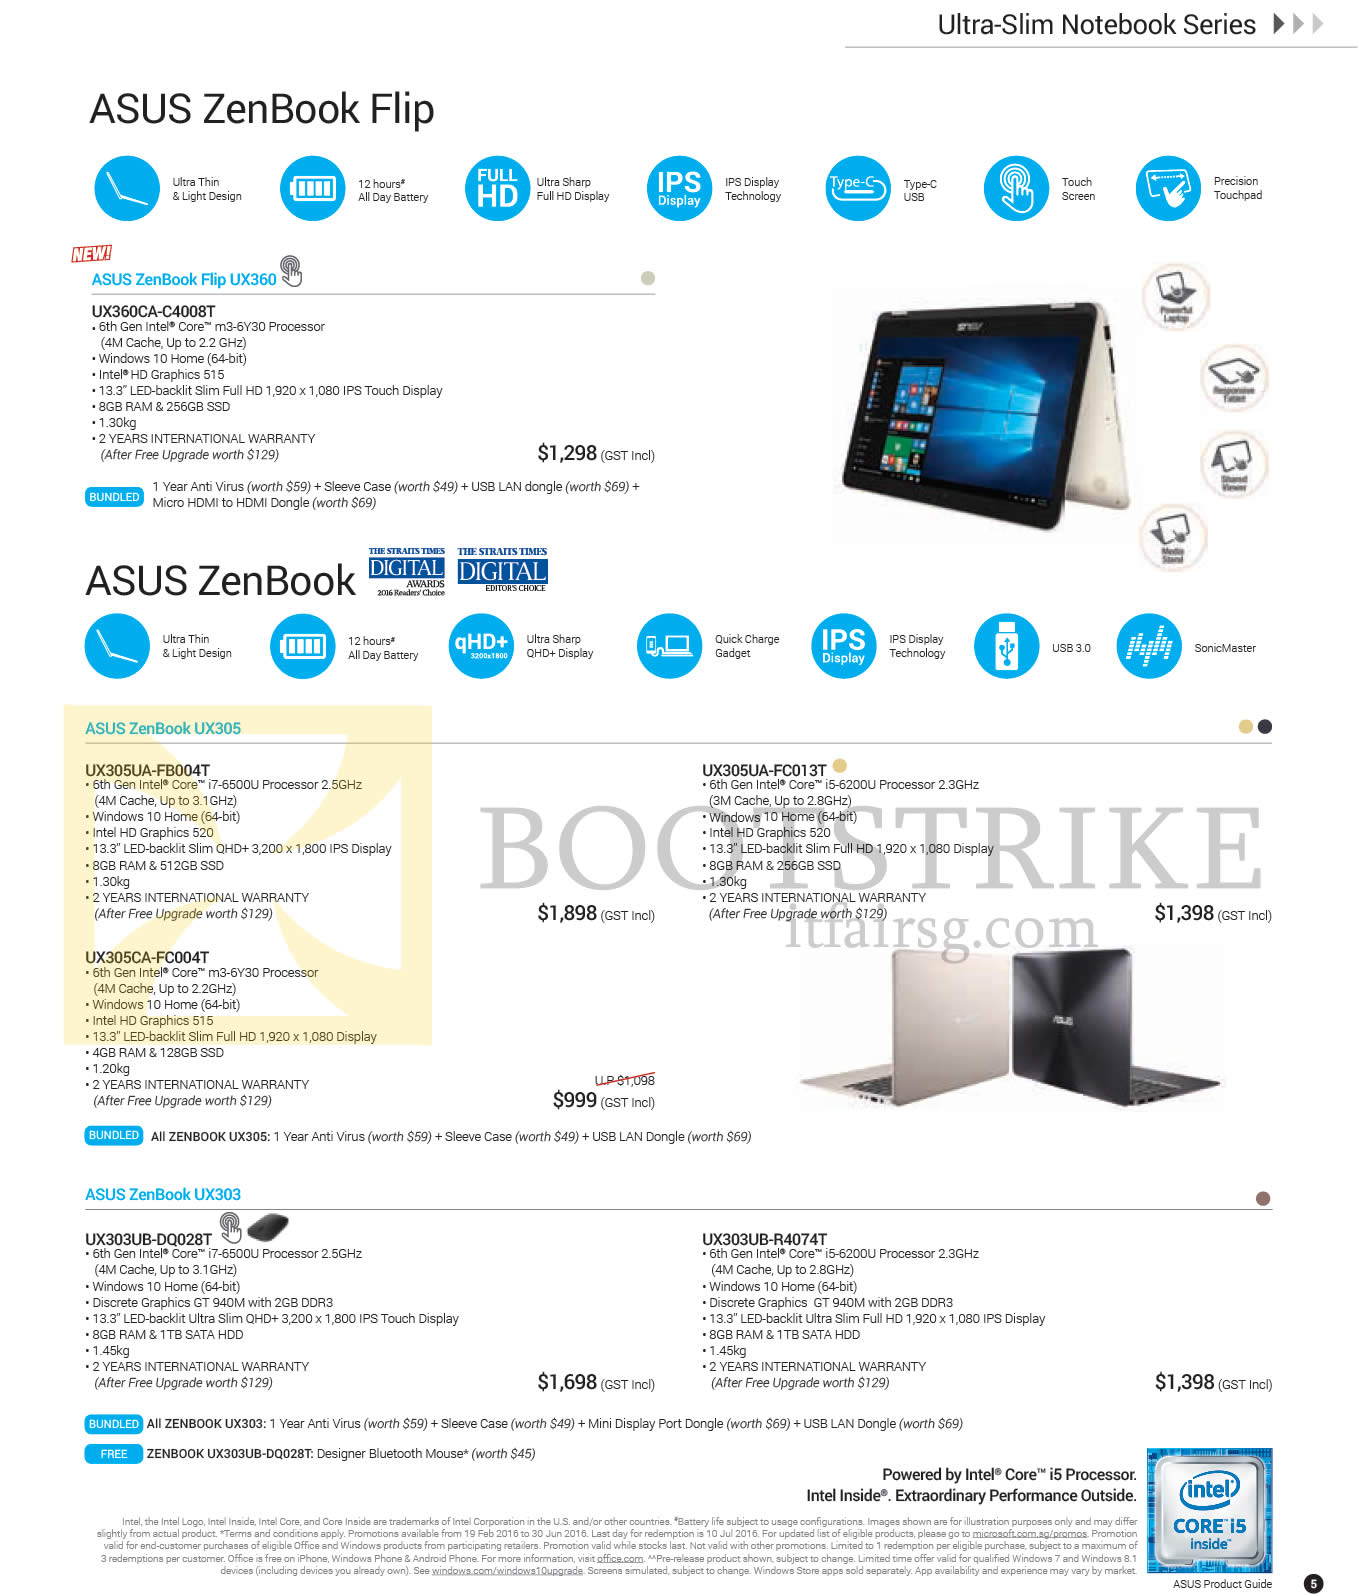 PC SHOW 2016 price list image brochure of ASUS Notebooks ZenBook Flip UX360CA-C4008T, ZenBook UX305UA-FB004T, UX305CA-FC004T, UX305UA-FC013T, UX303UB-DQ028T, UX303UB-R4074T